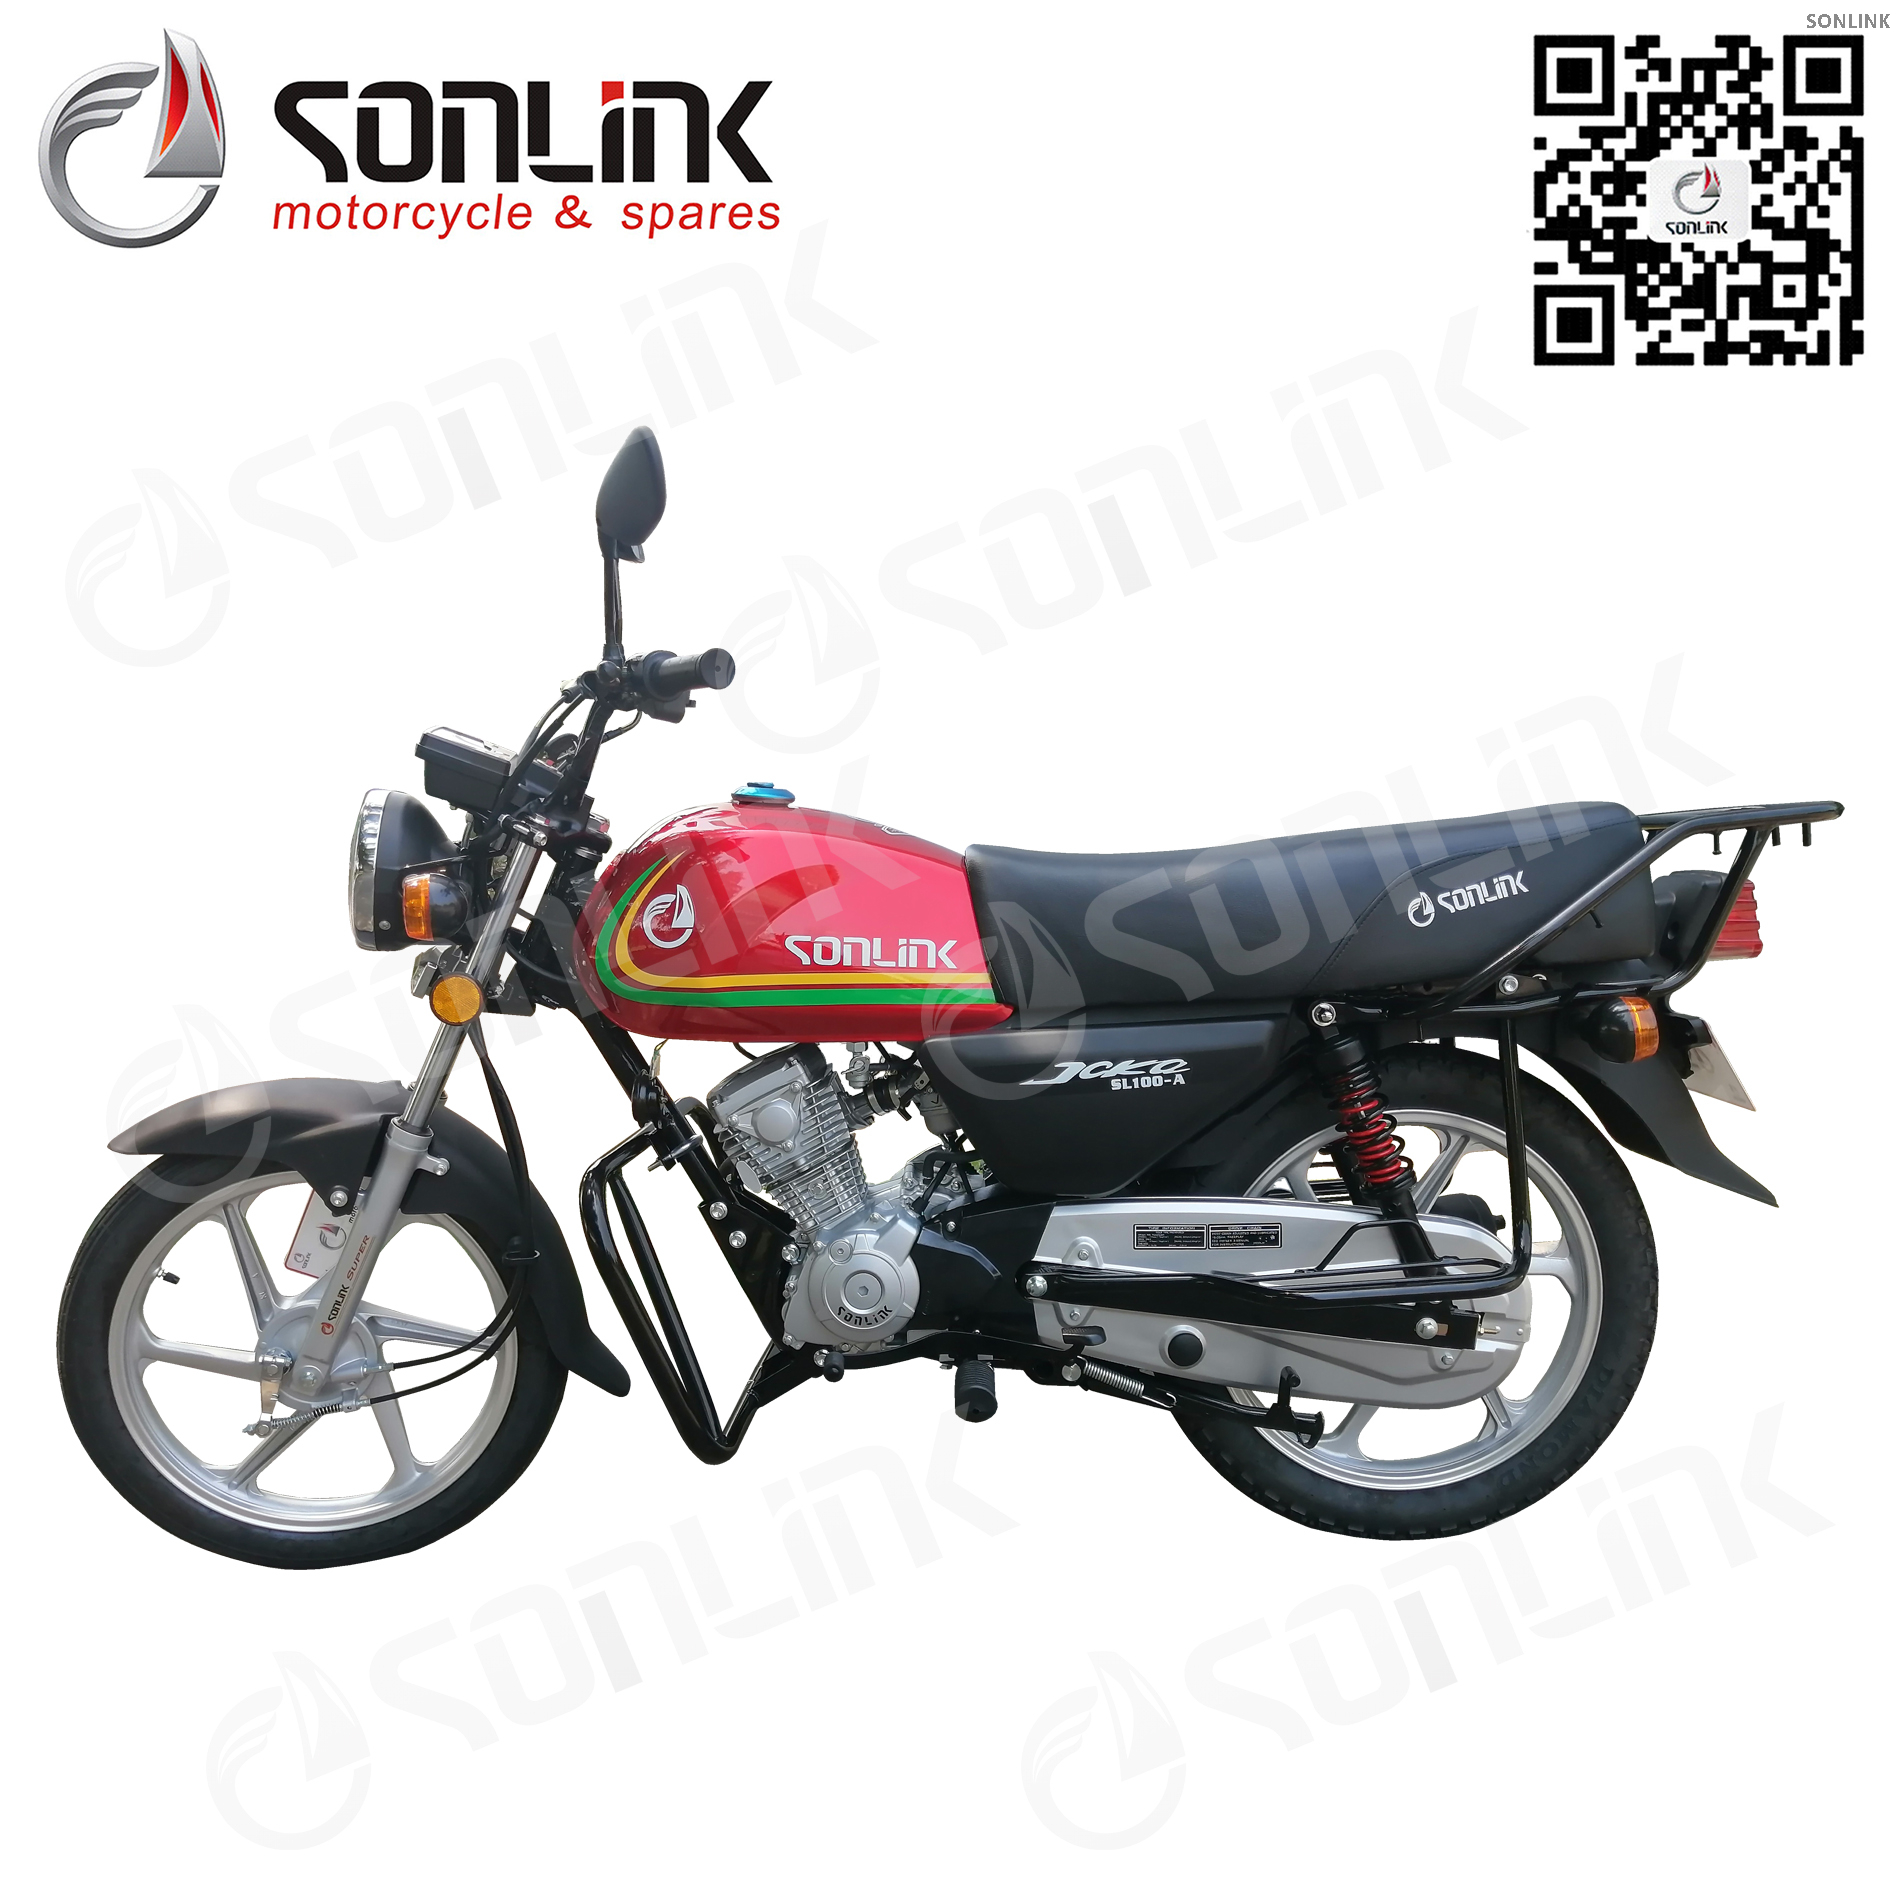 SL100-A BOXER MOTORCYCLE